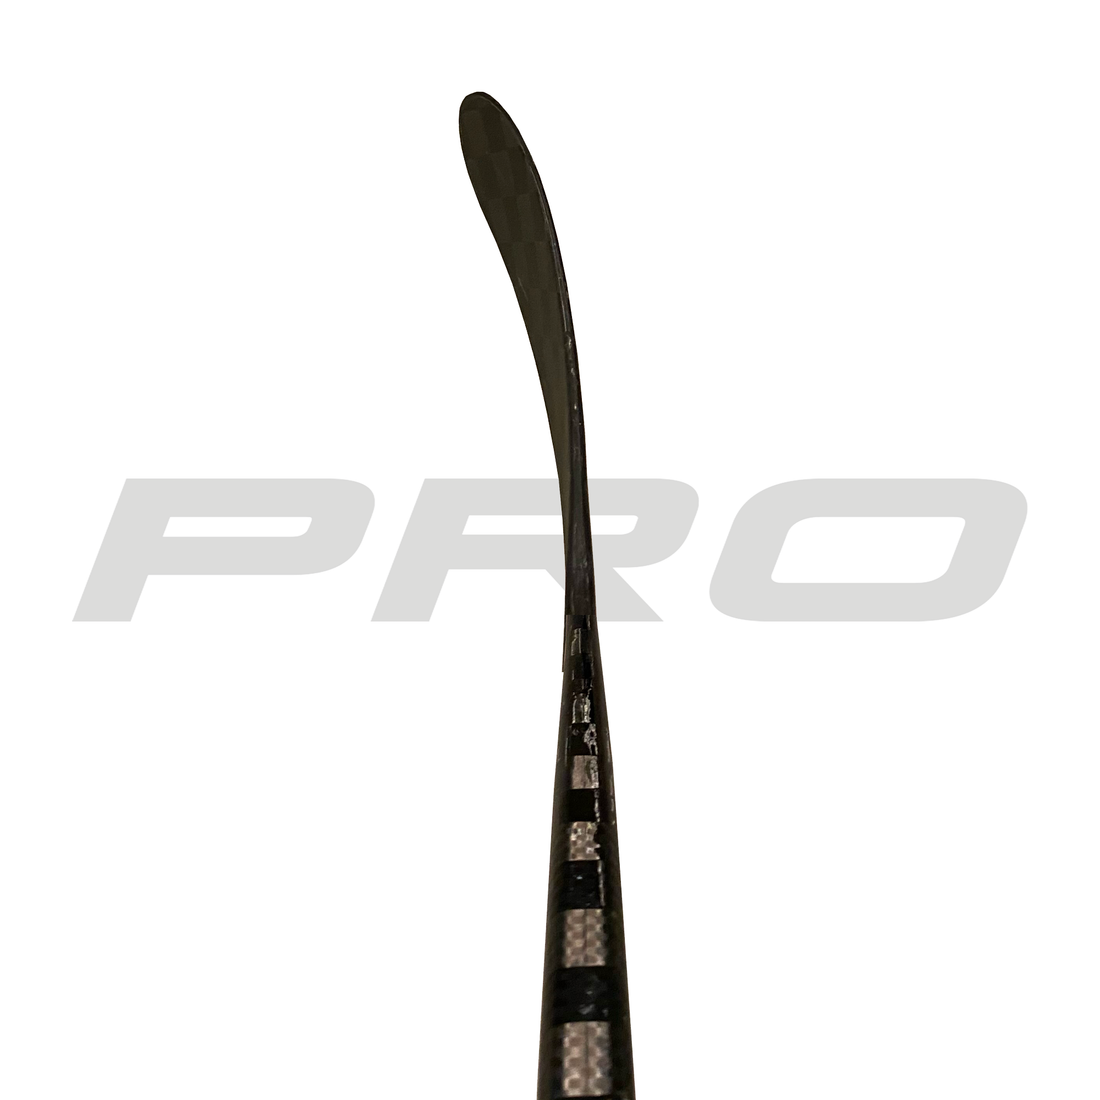 PRO28M (ST: Seider Pro) - Third Line (425 G) - Pro Stock Hockey Stick - Right